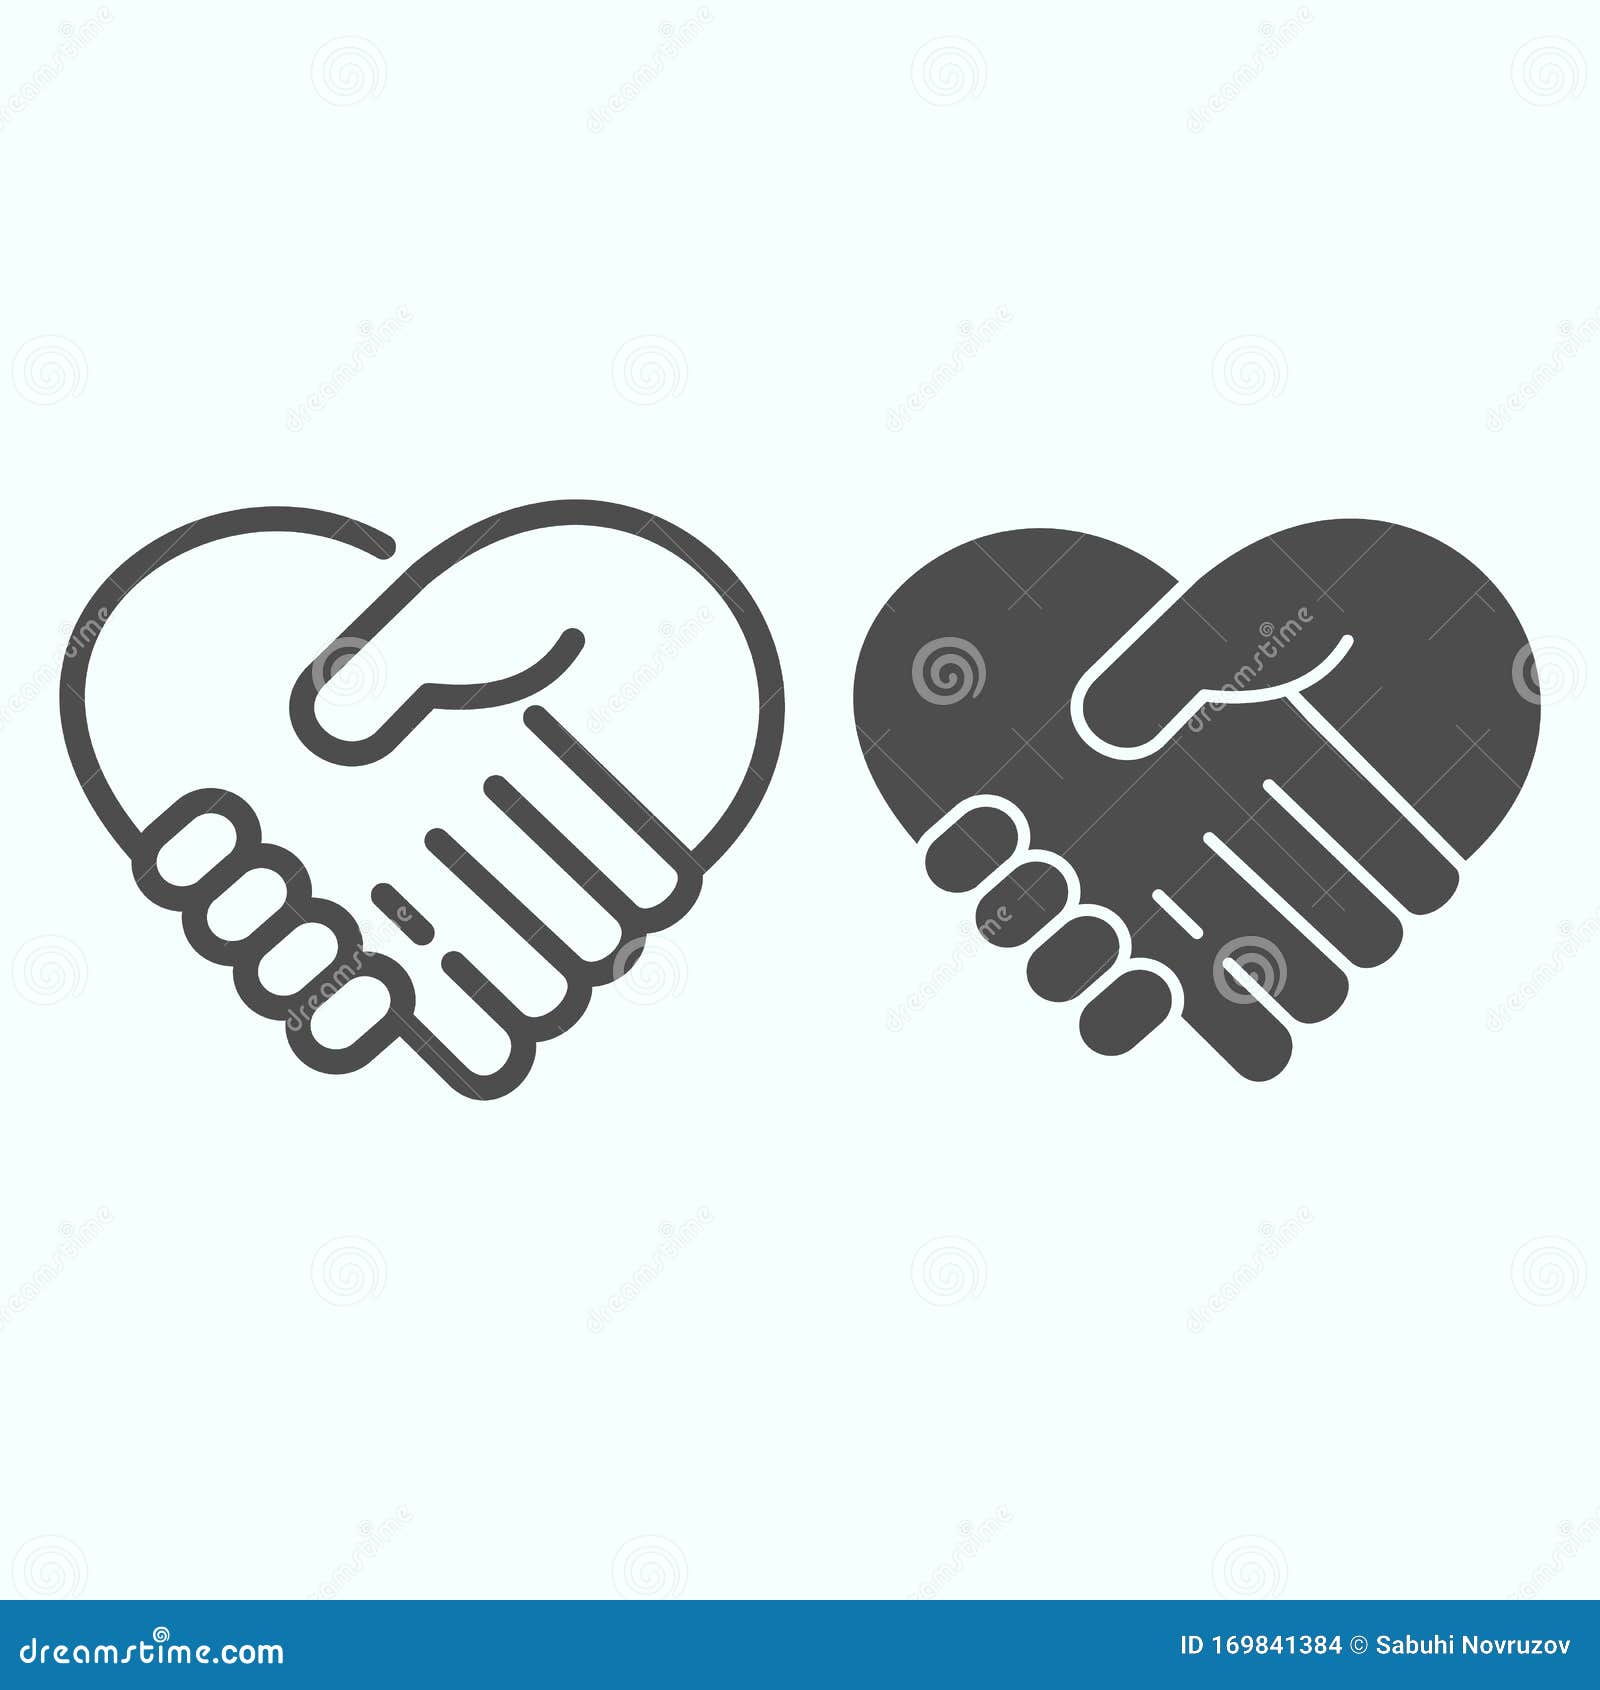 Handshake Skin 5 Vector SVG Icon - SVG Repo